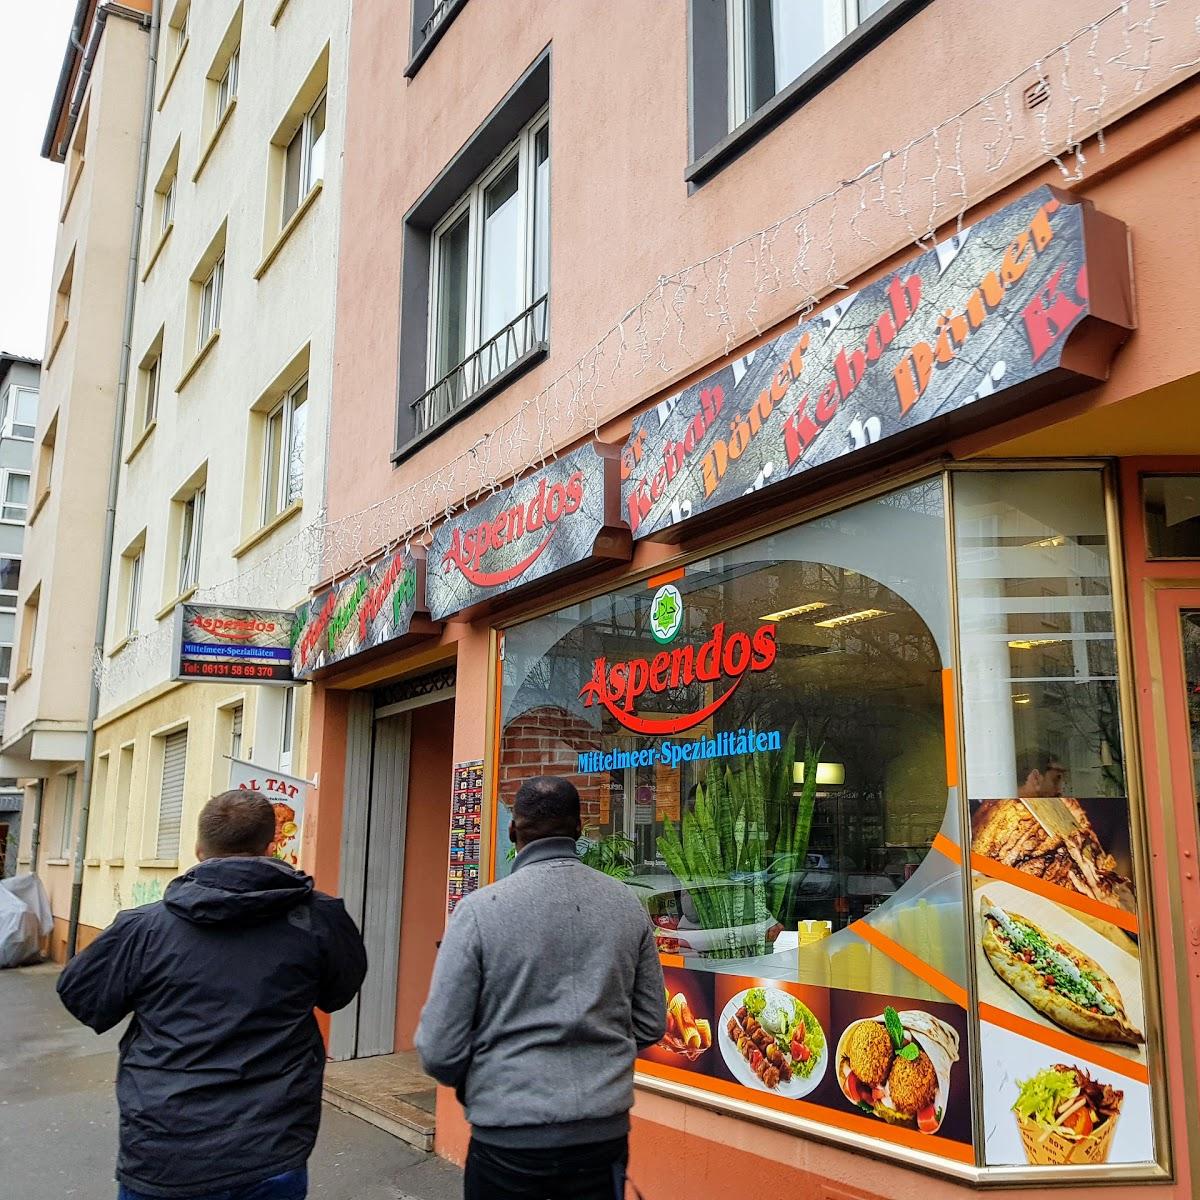 Restaurant "Aspendos Döner" in Mainz